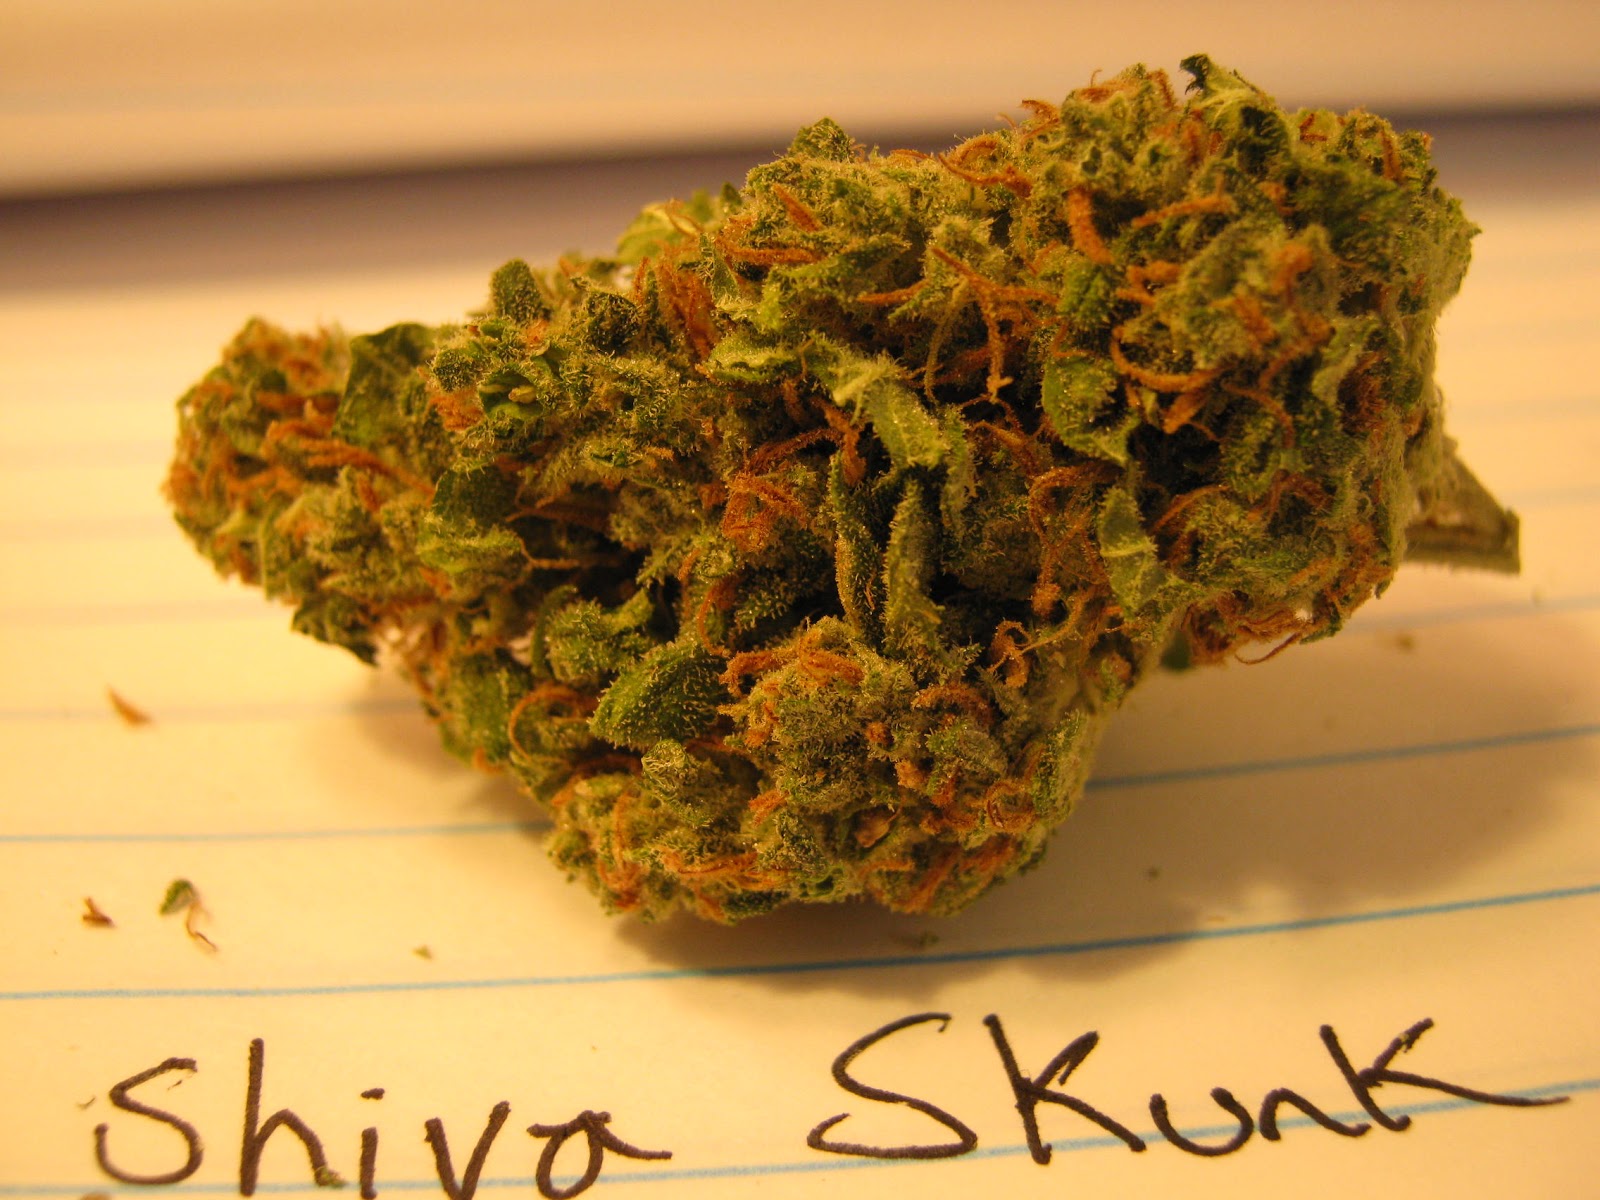 Shiva Skunk Strain Info.